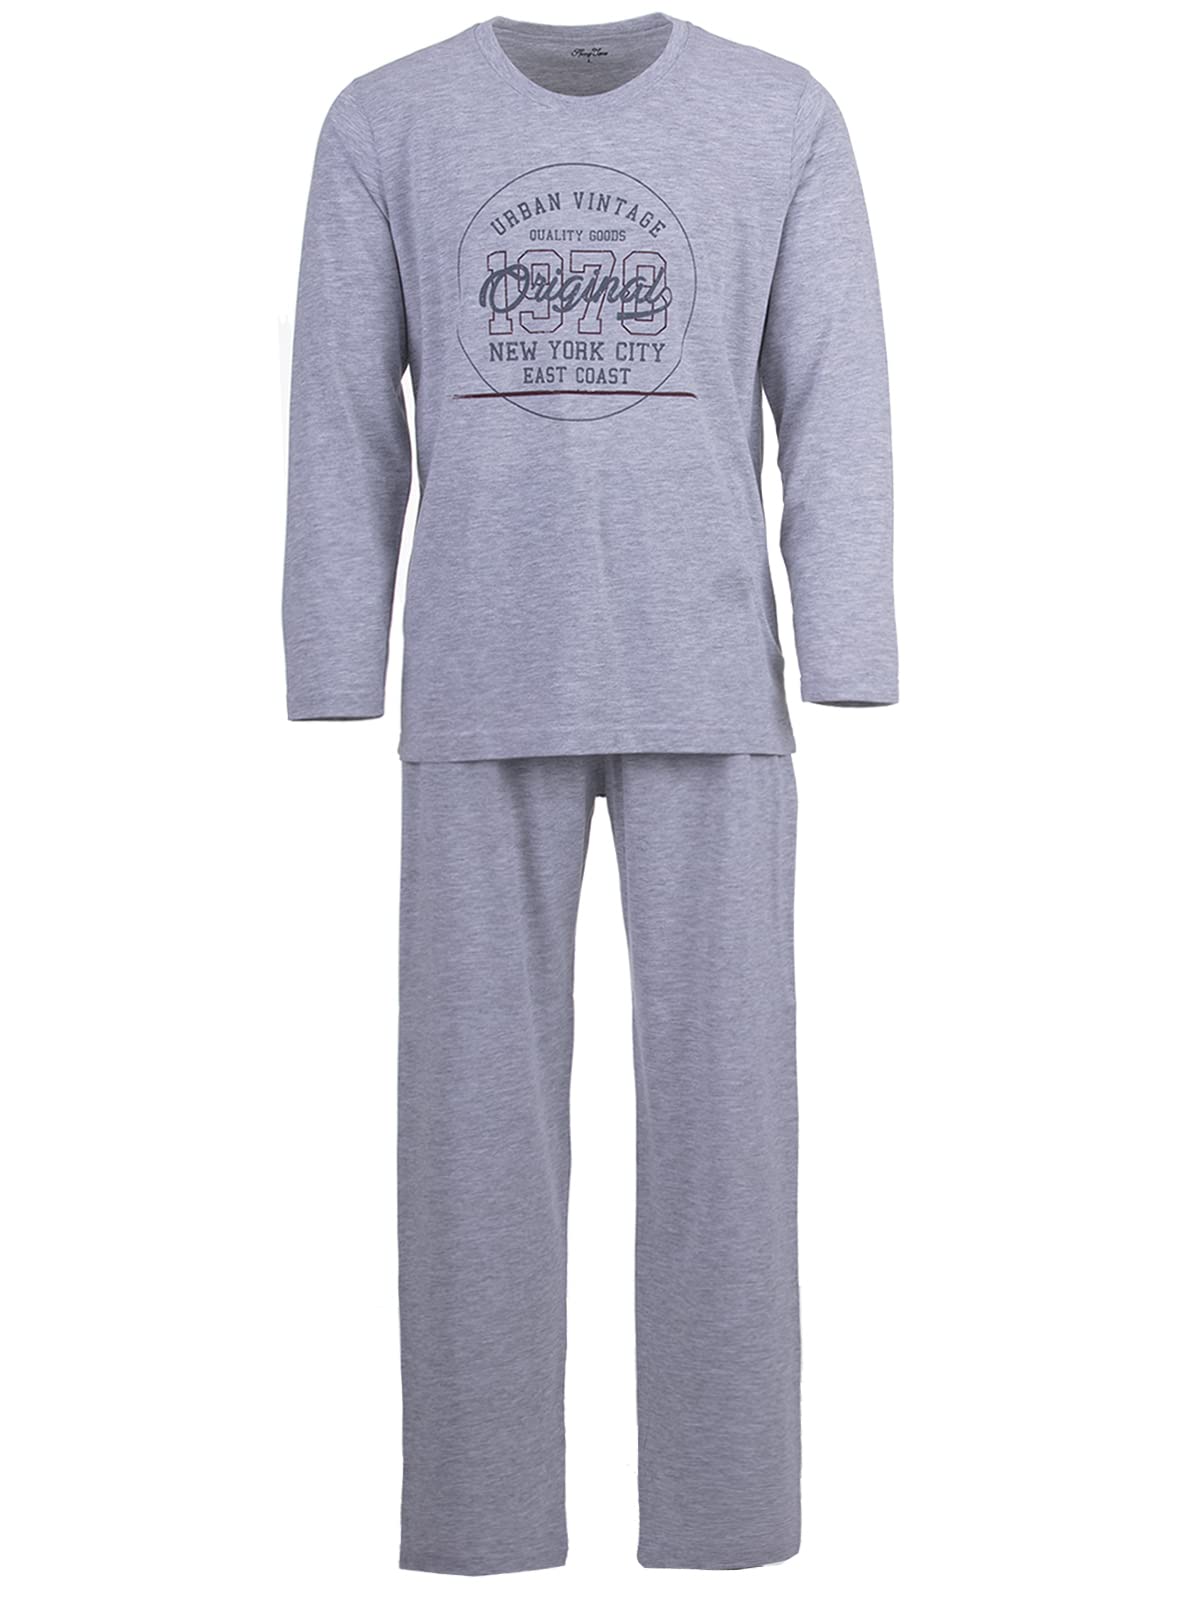 LUCKY Herren Pyjama lang Schlafanzug Pyjama Set Druck Motiv, Farbe:Grau, Größe:M